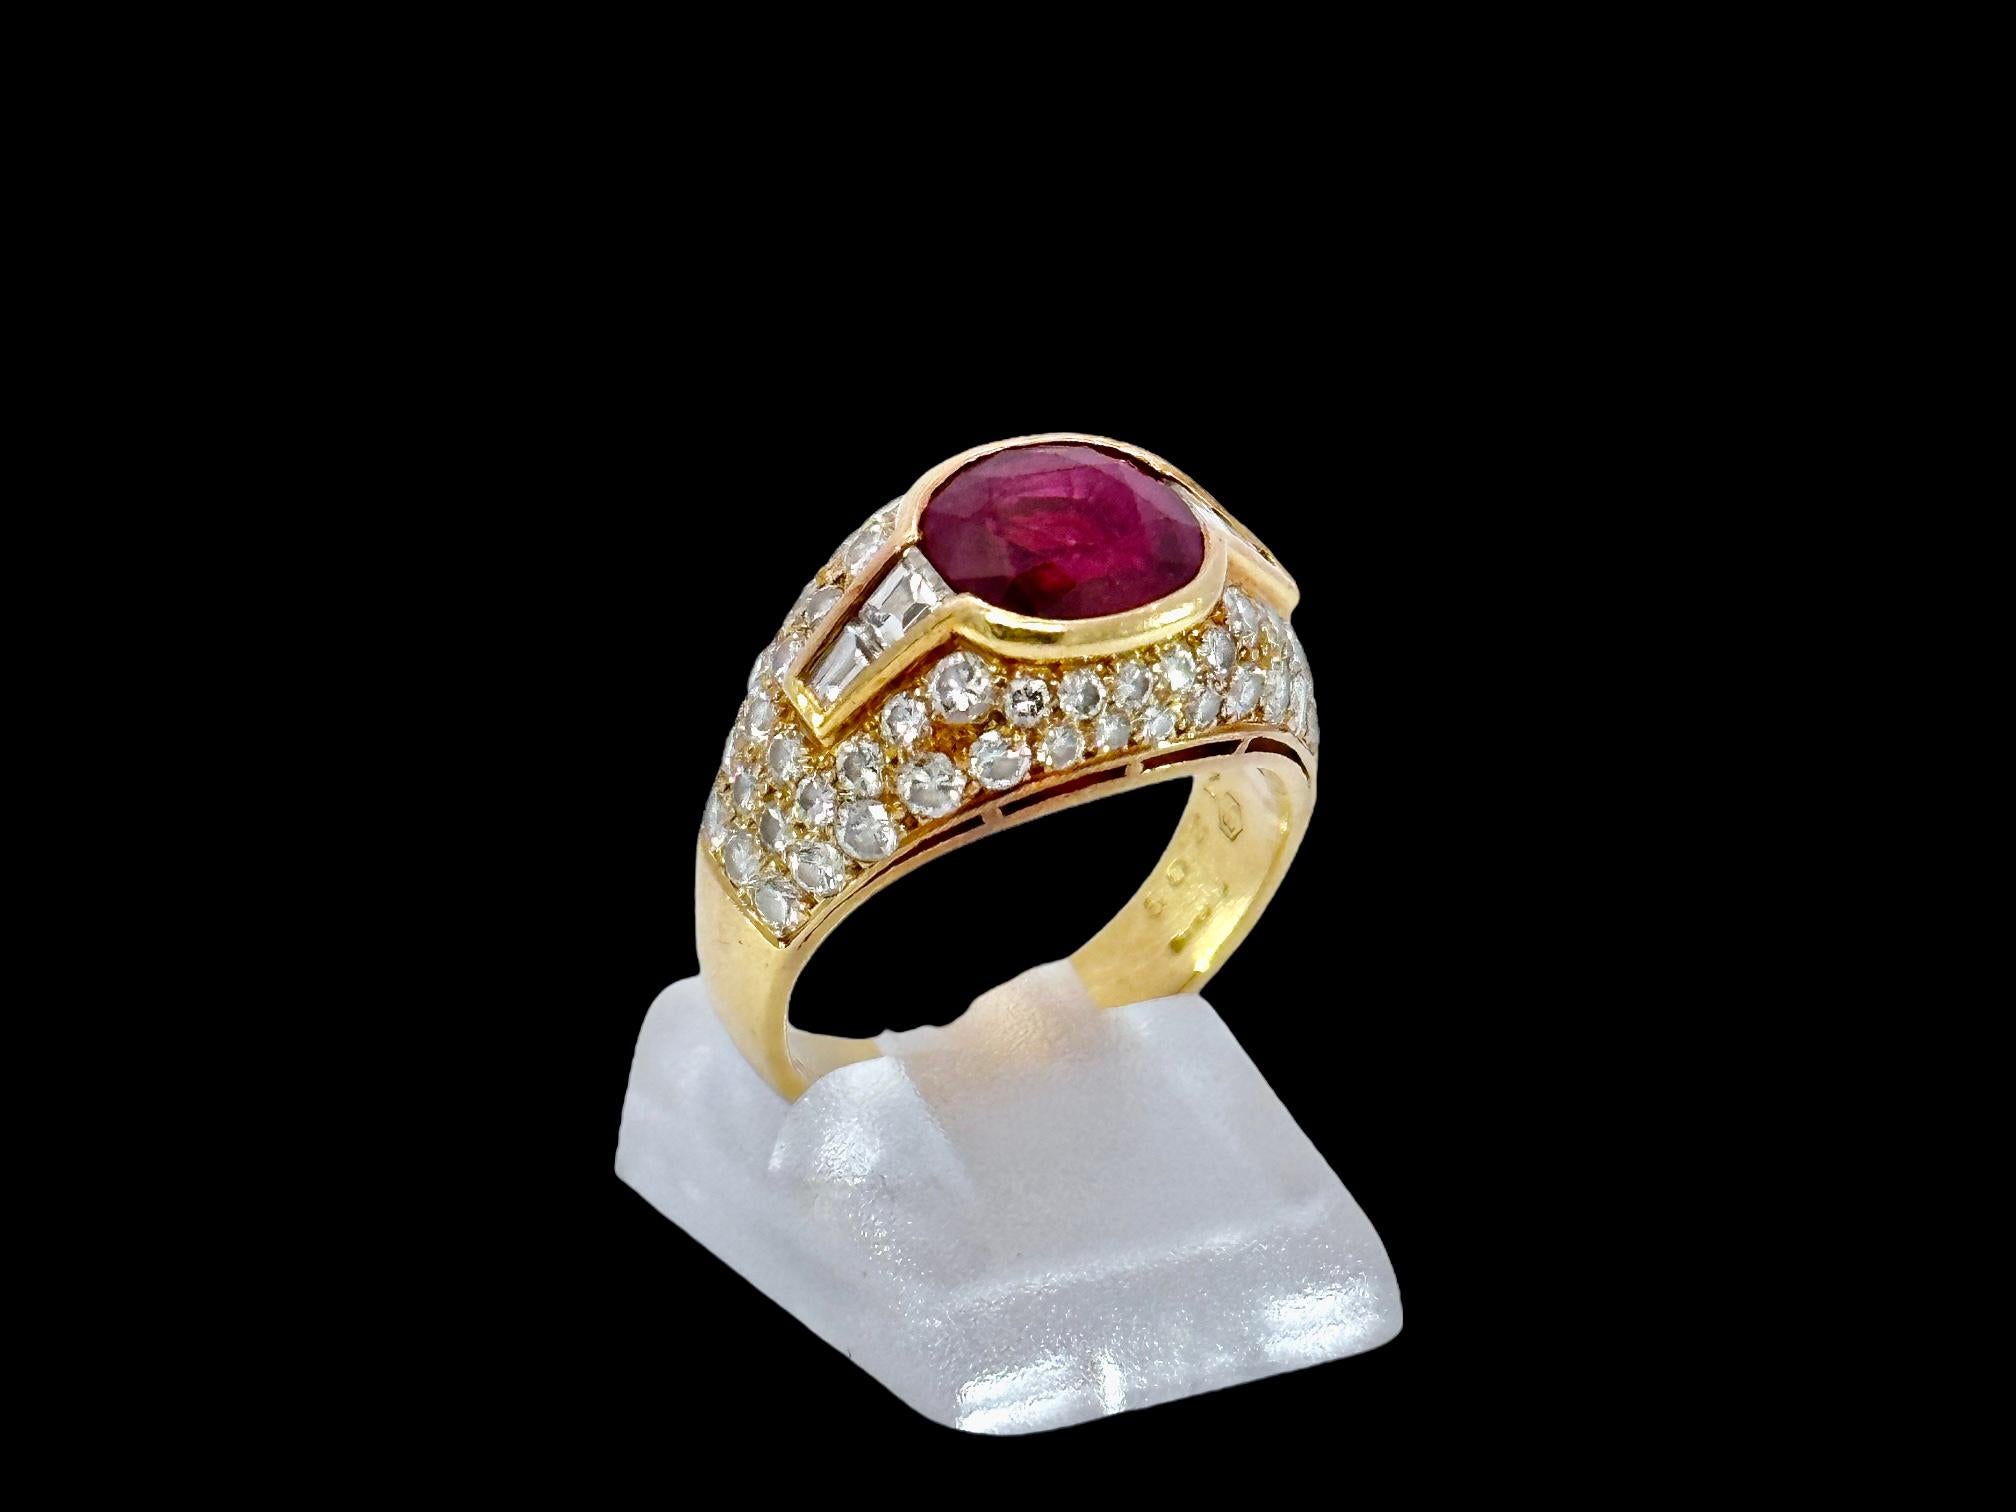 Bvlgari Trombino 18kt Yellow Gold Ring 2.09ct Ruby & Diamonds With GRS Cert For Sale 2